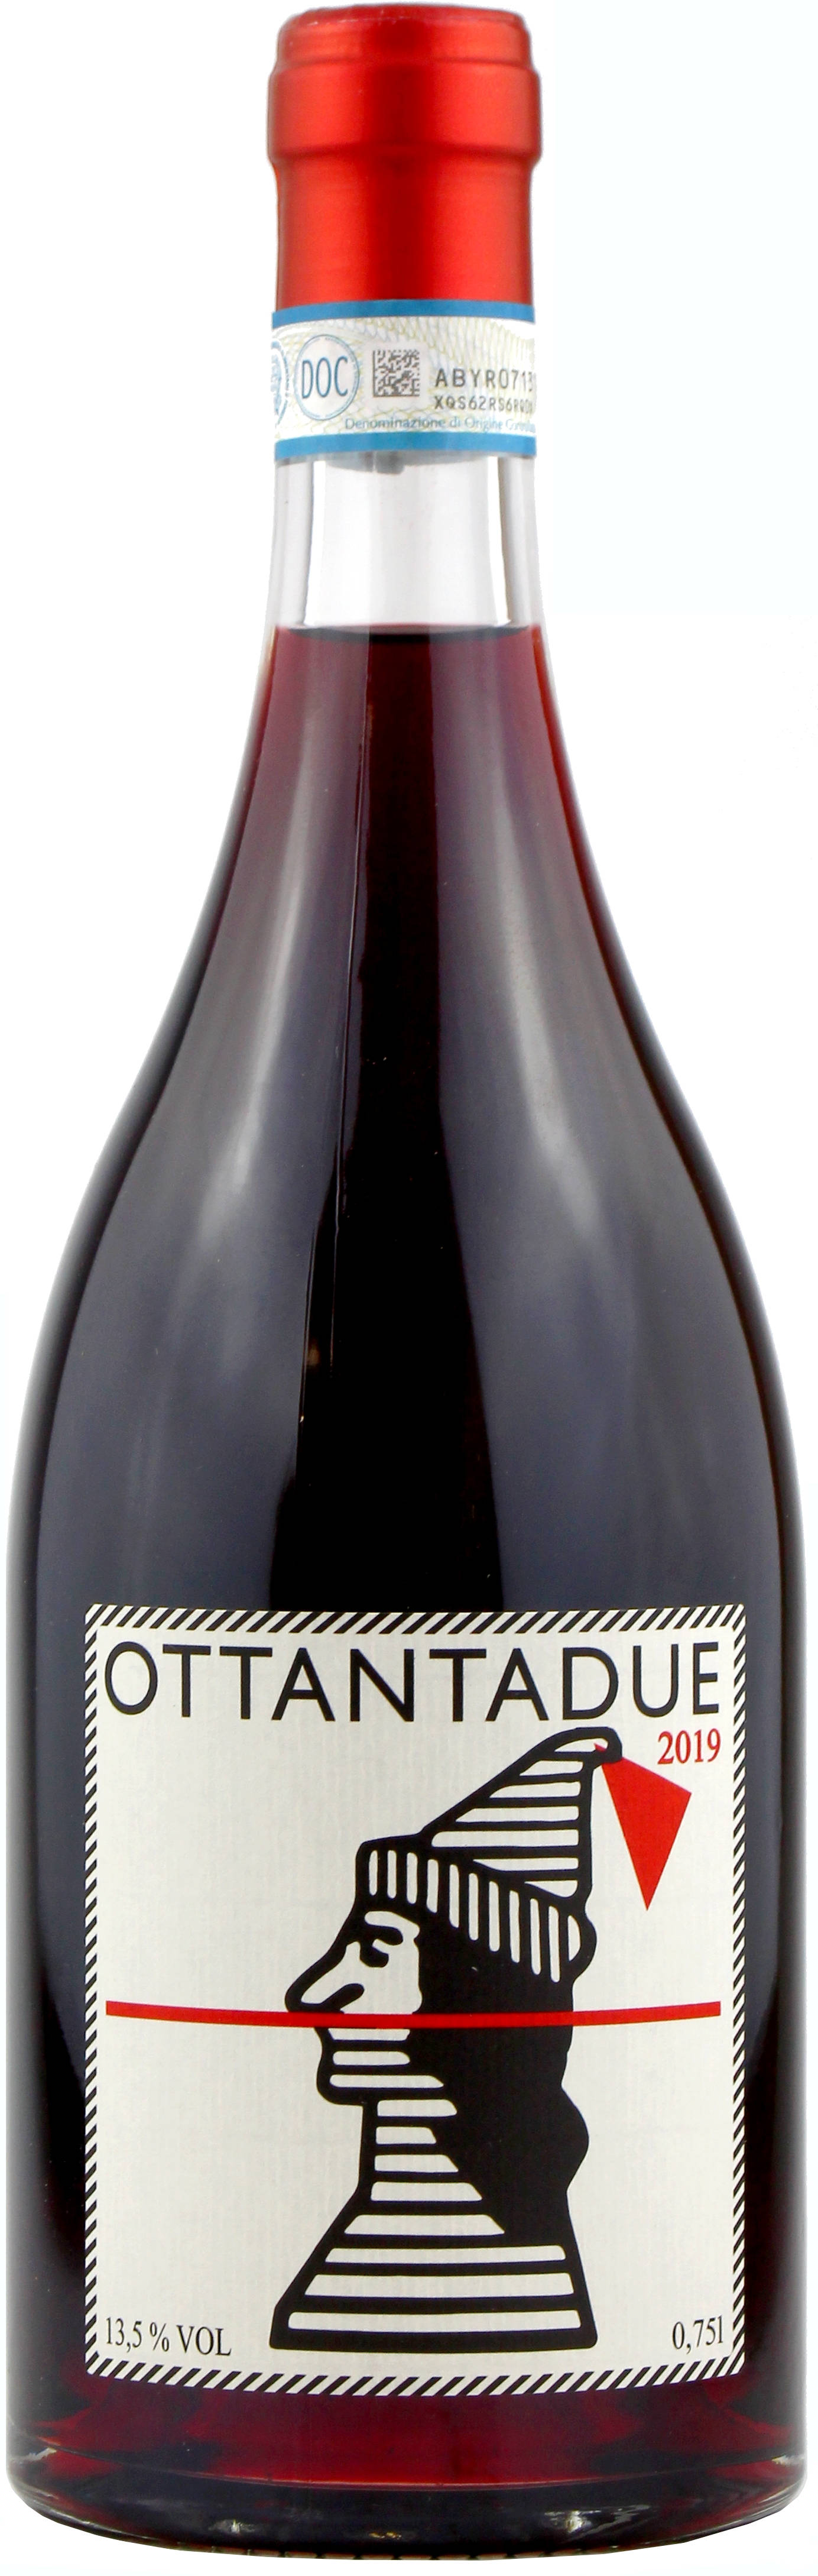 Scholz 2019 Ottantadue, Carnasciale, Wein Toskana, Rotwein, Il | Italien Direktimport